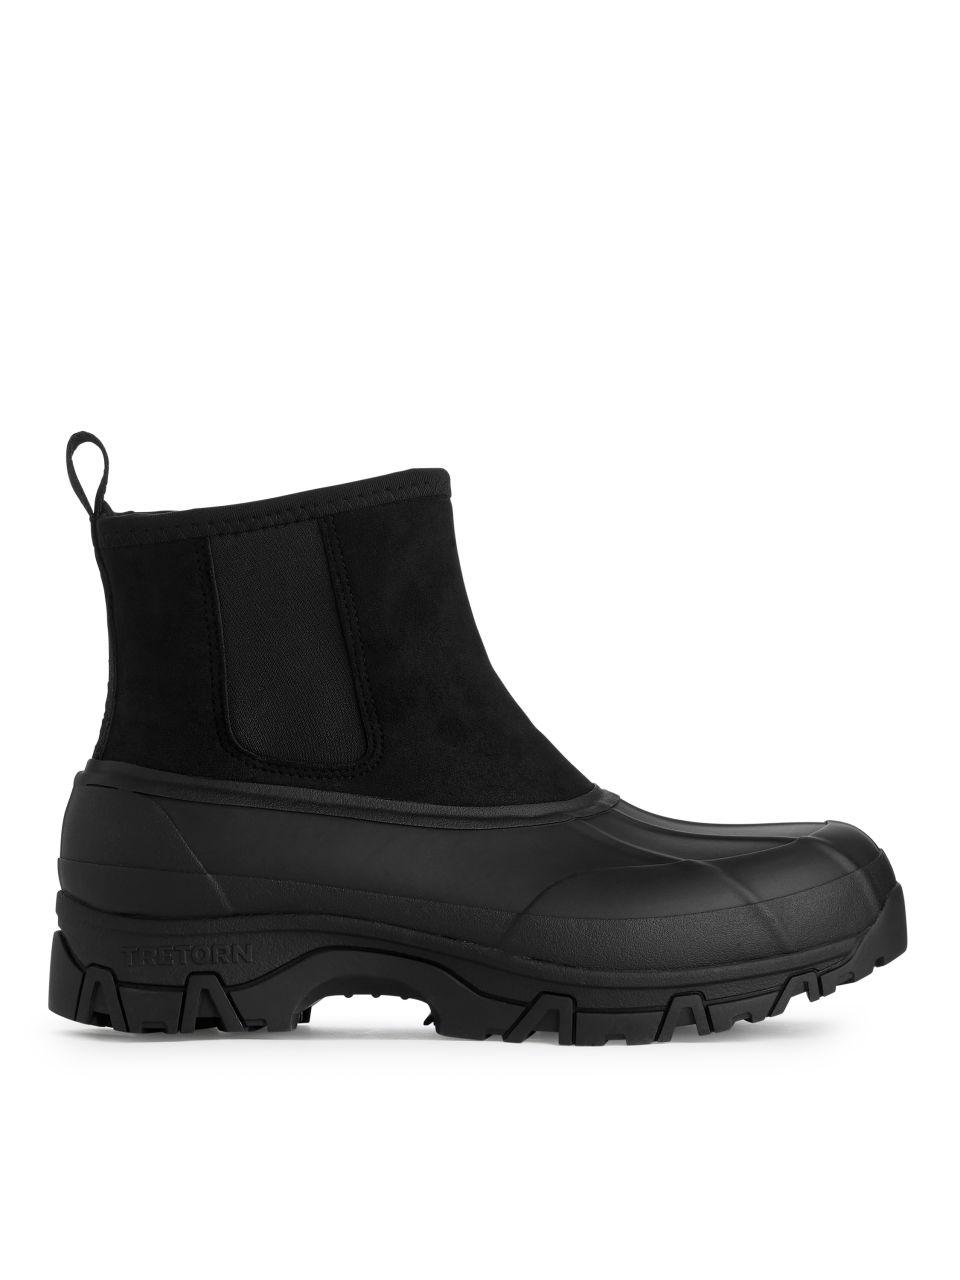 Tretorn Ahus Hybrid Boots in Black | Lyst UK